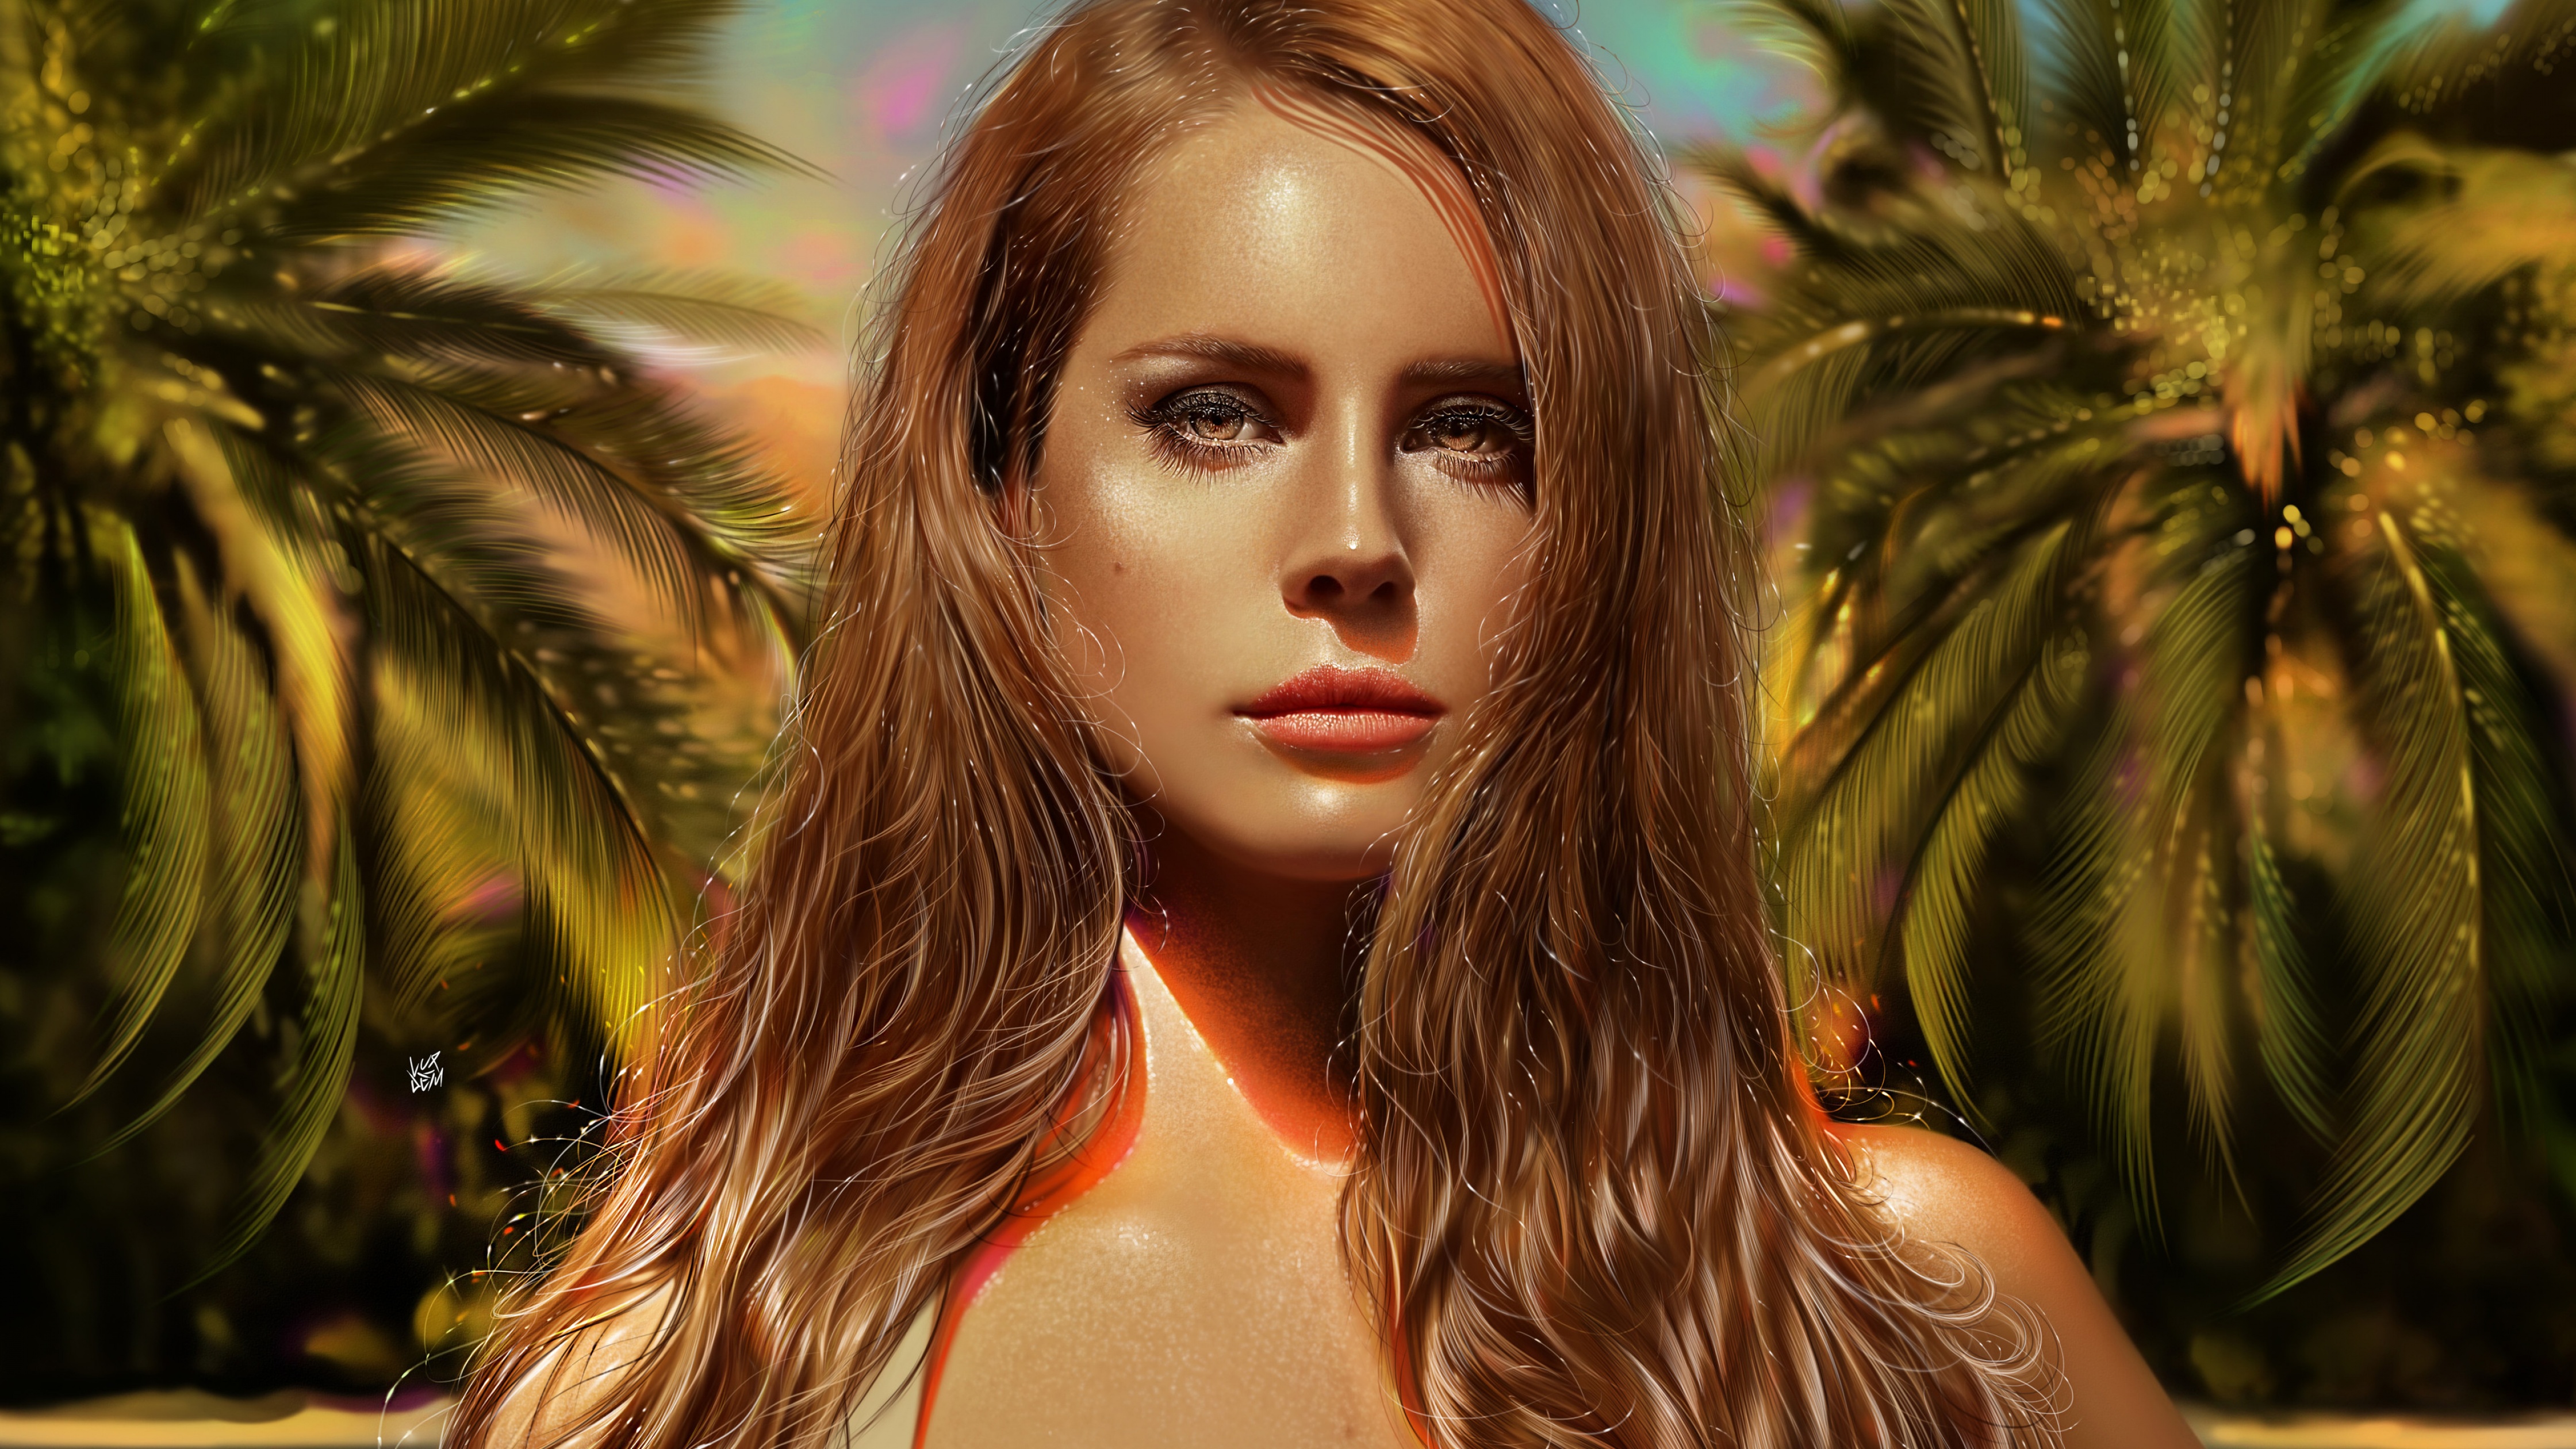 A woman with long hair and wearing bikini - Lana Del Rey